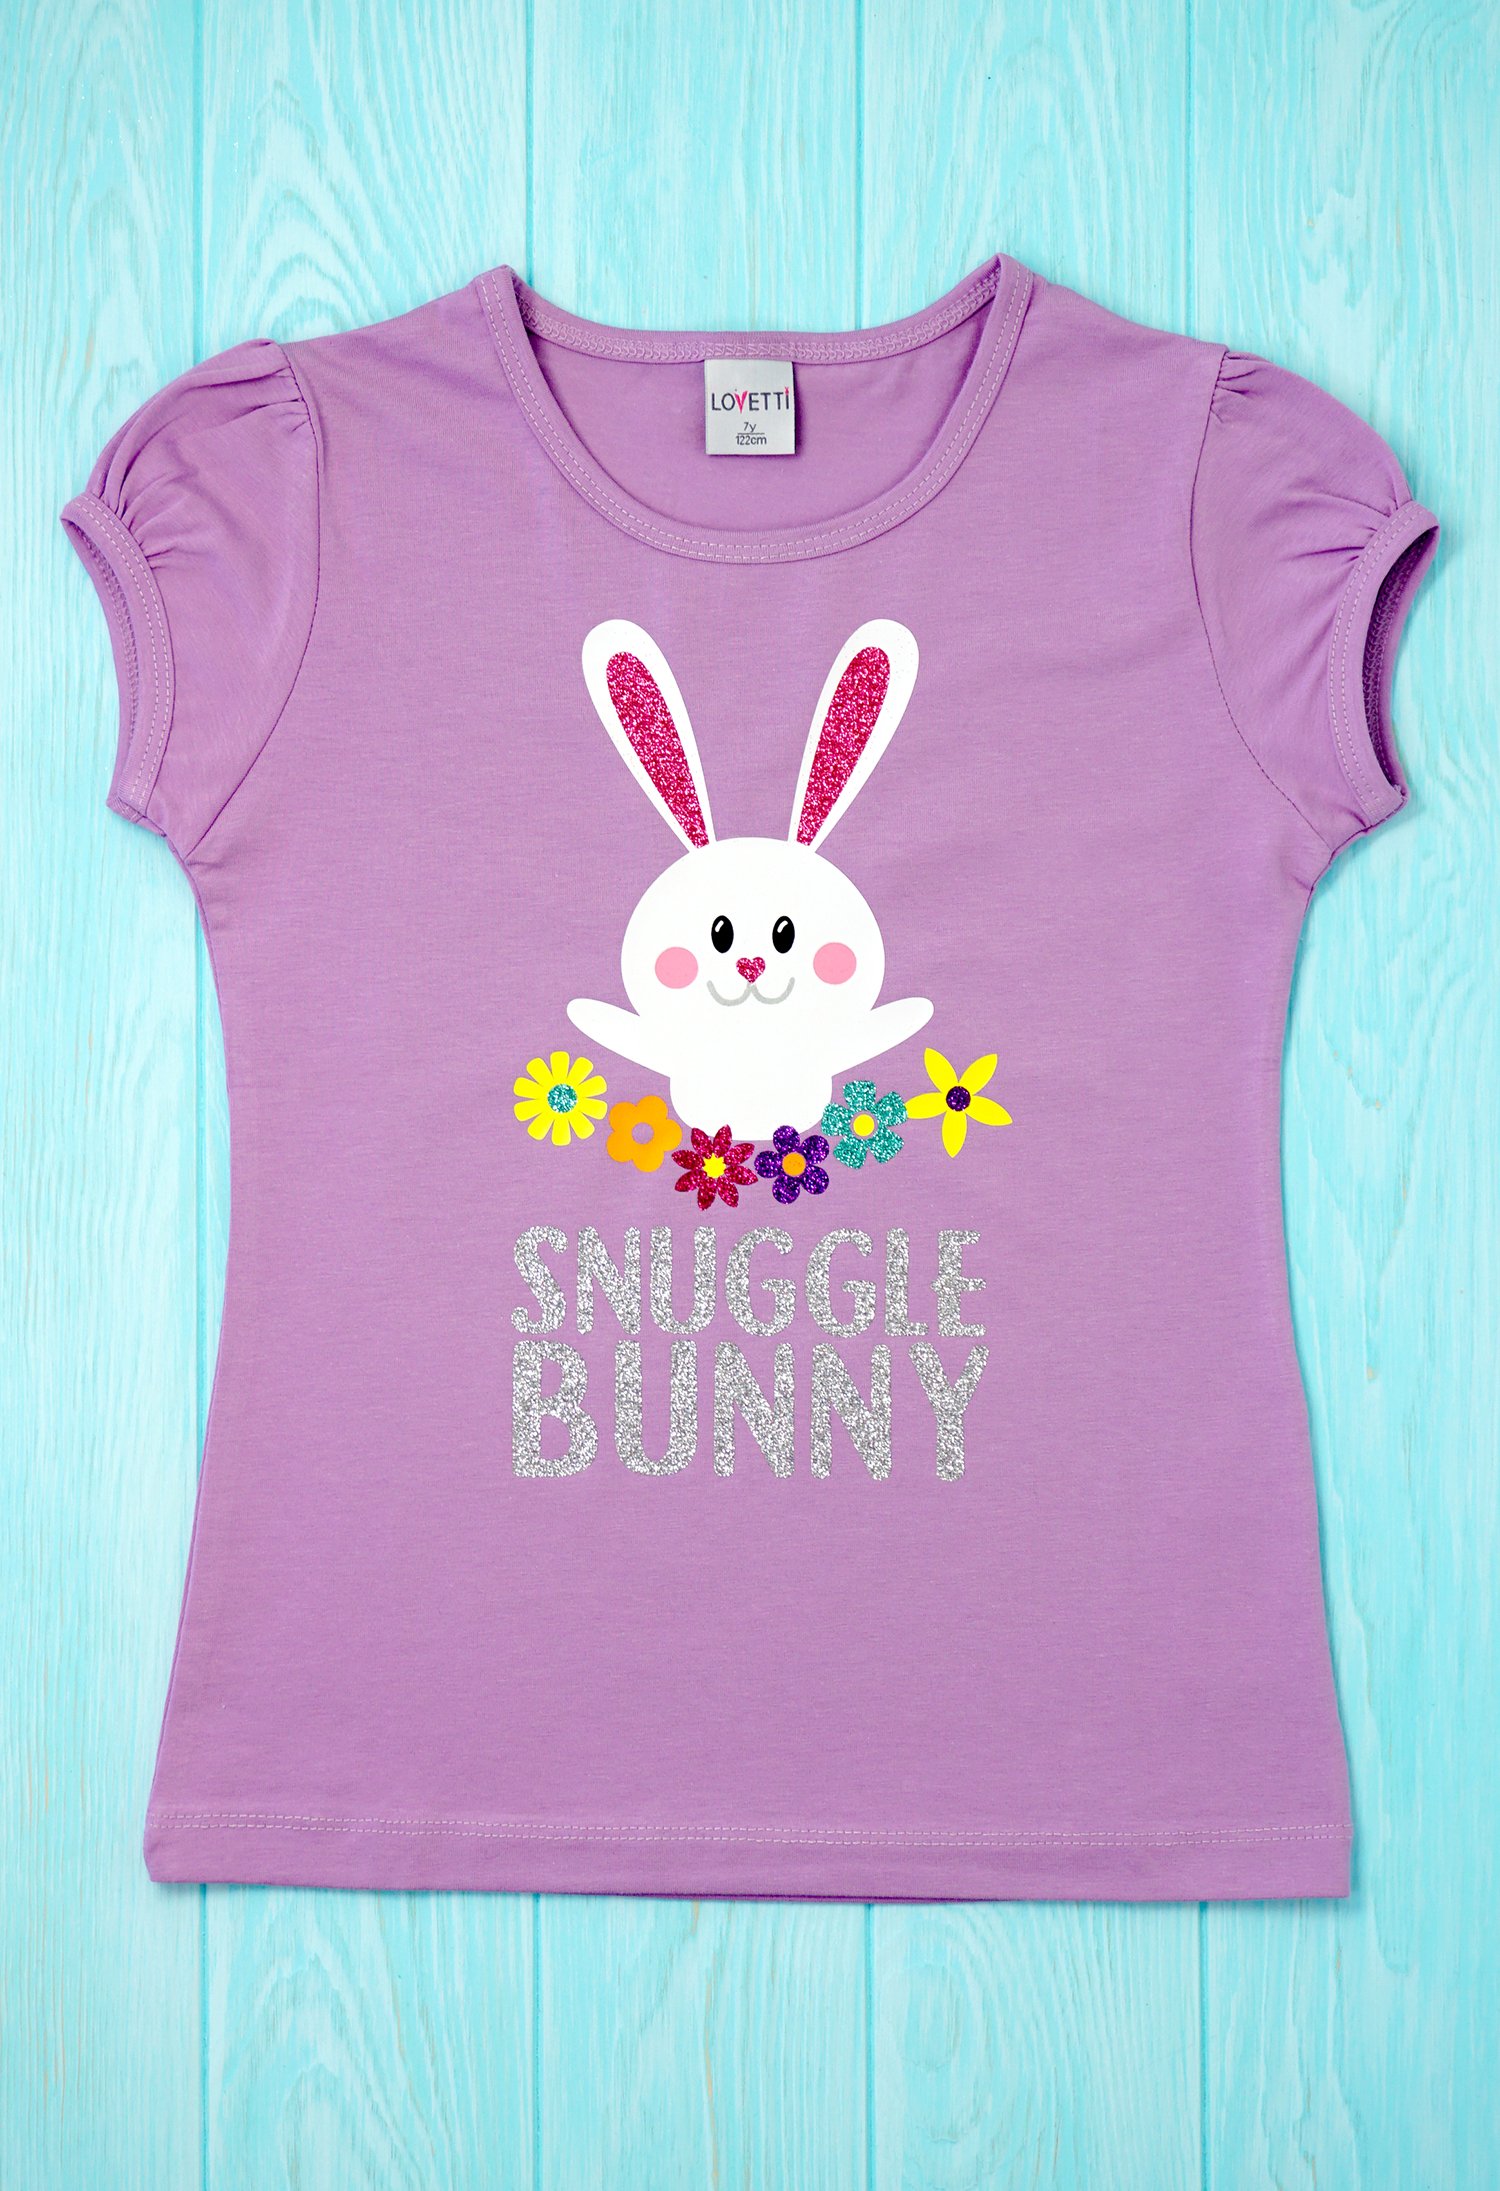 snuggle bunny easter shirt 